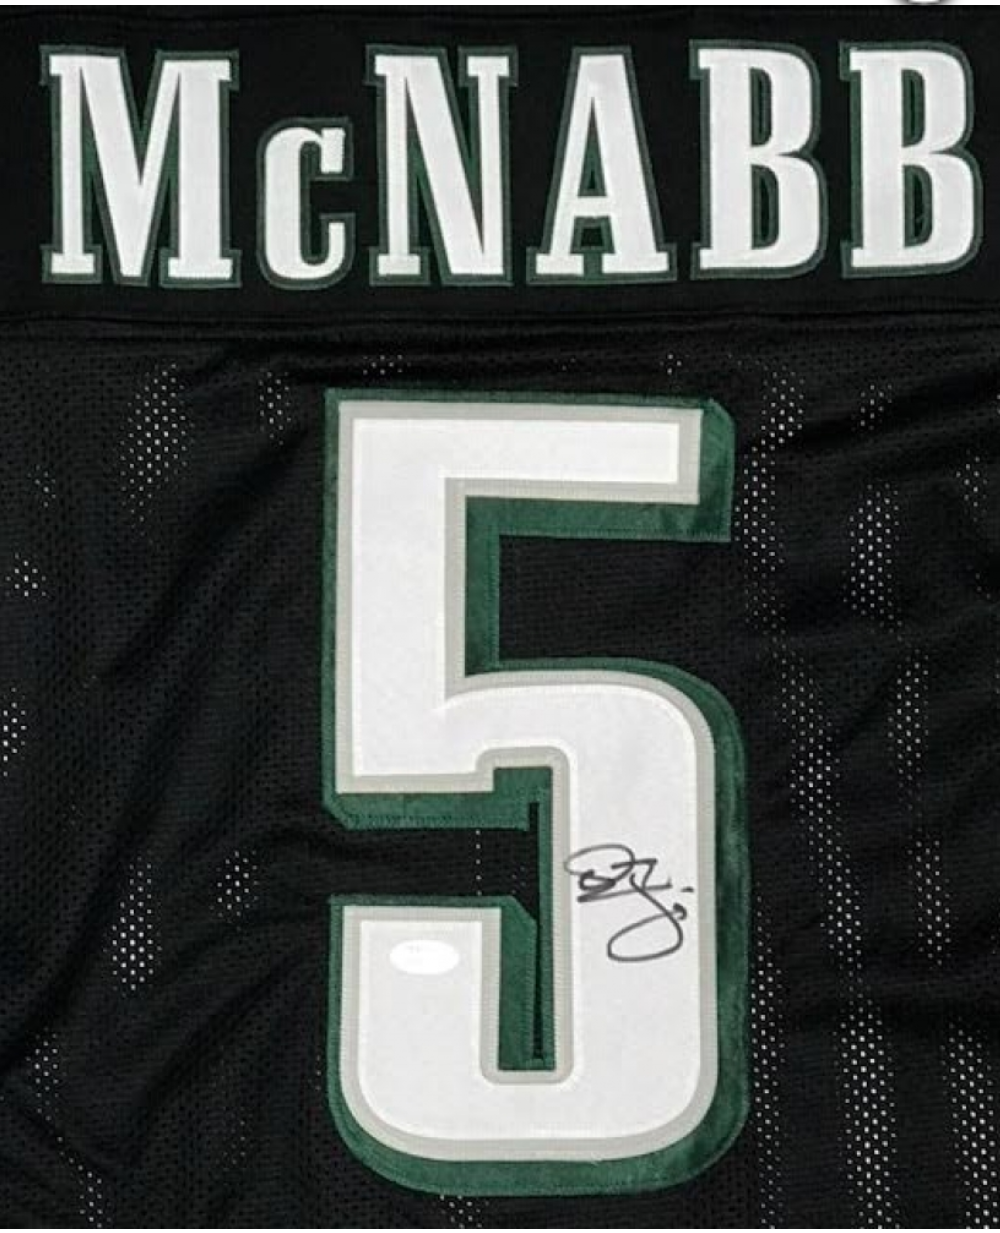 mcnabb signed jersey